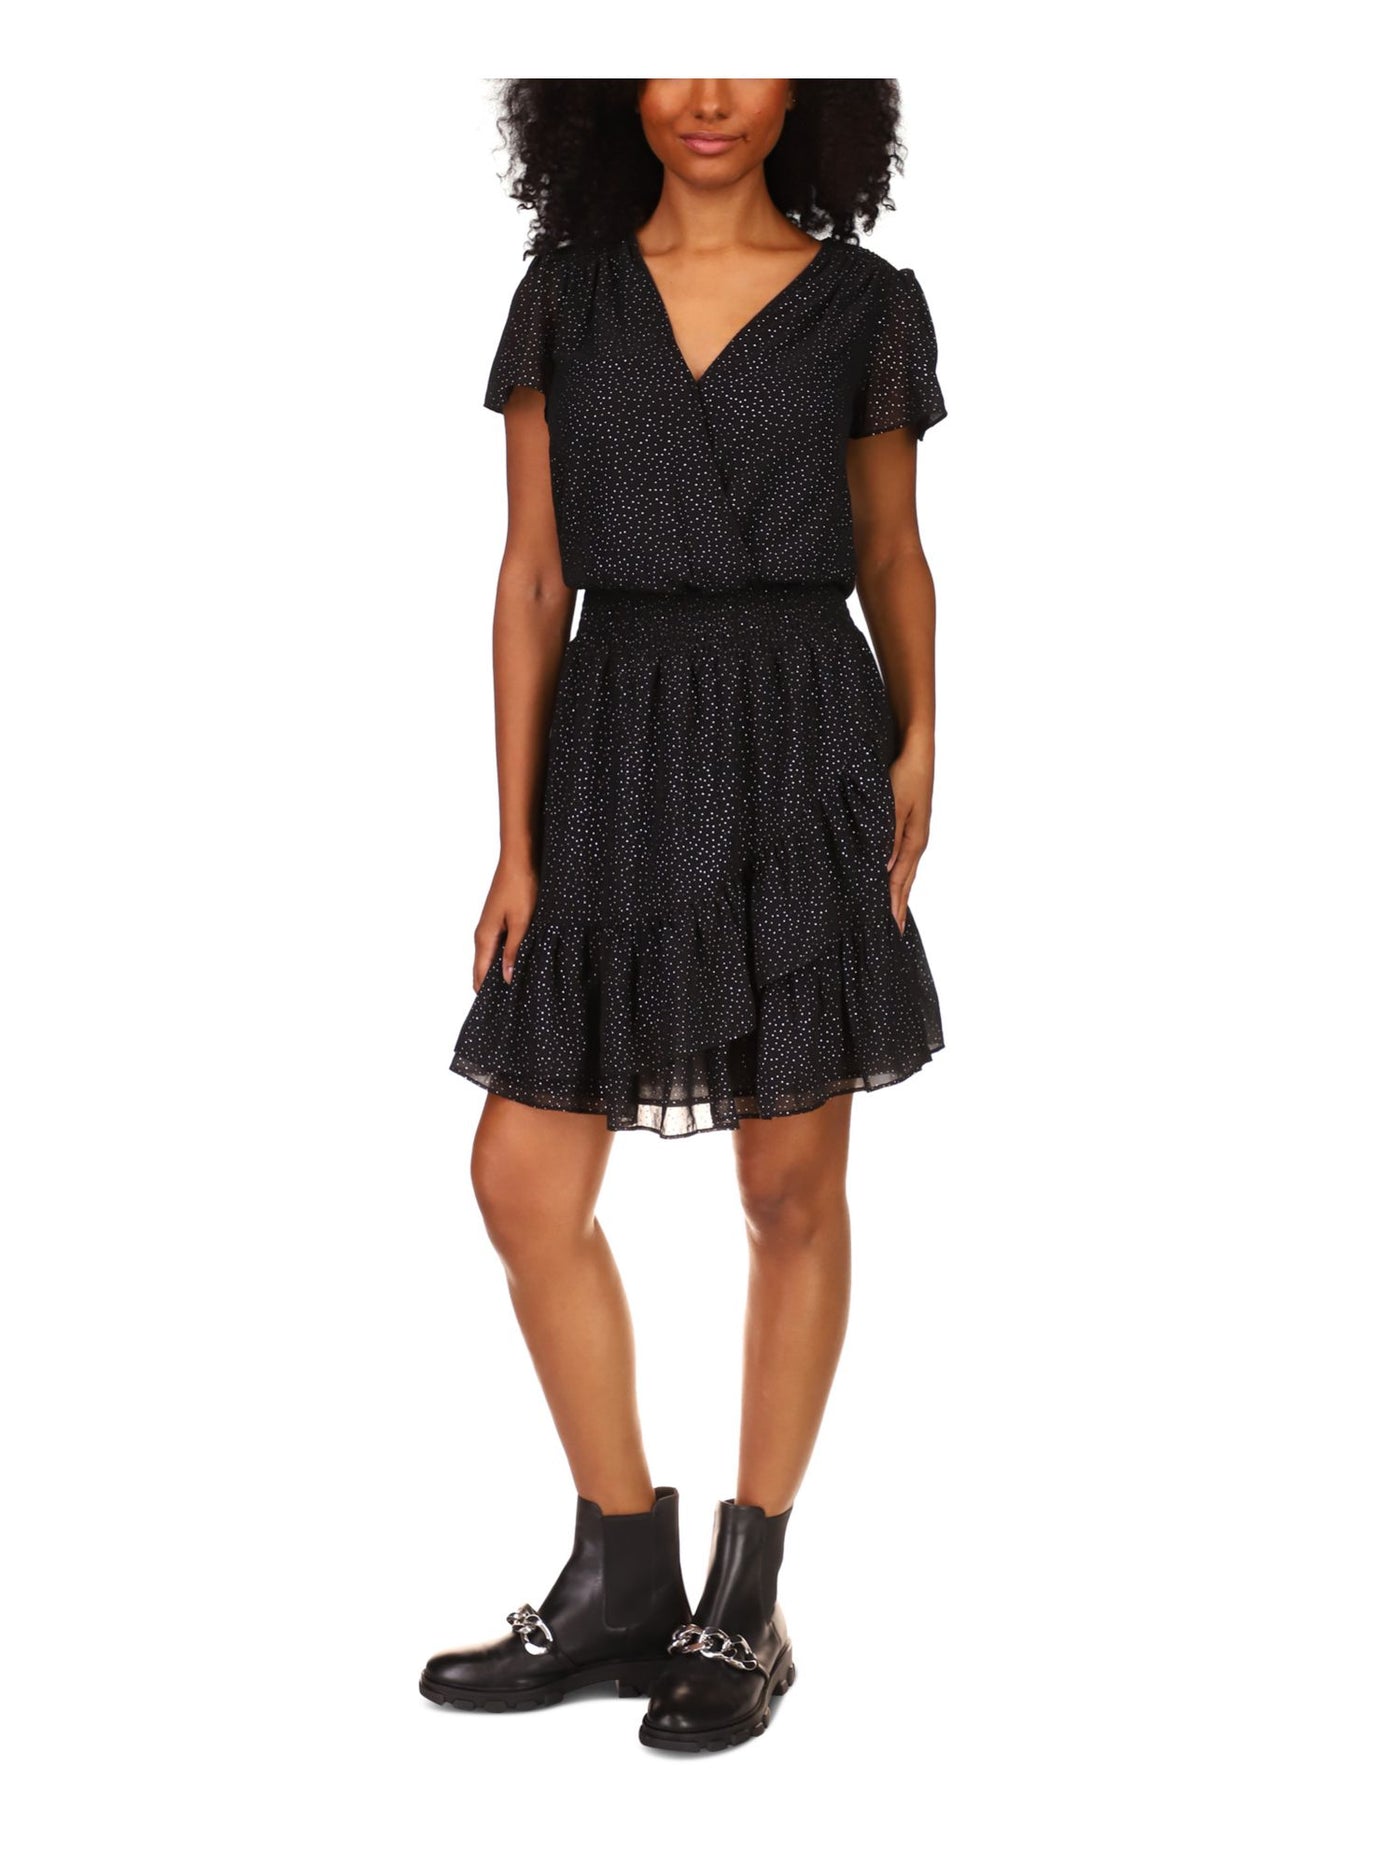 MICHAEL KORS Womens Black Smocked Ruffled Lined Flutter Sleeve Surplice Neckline Short Faux Wrap Dress L